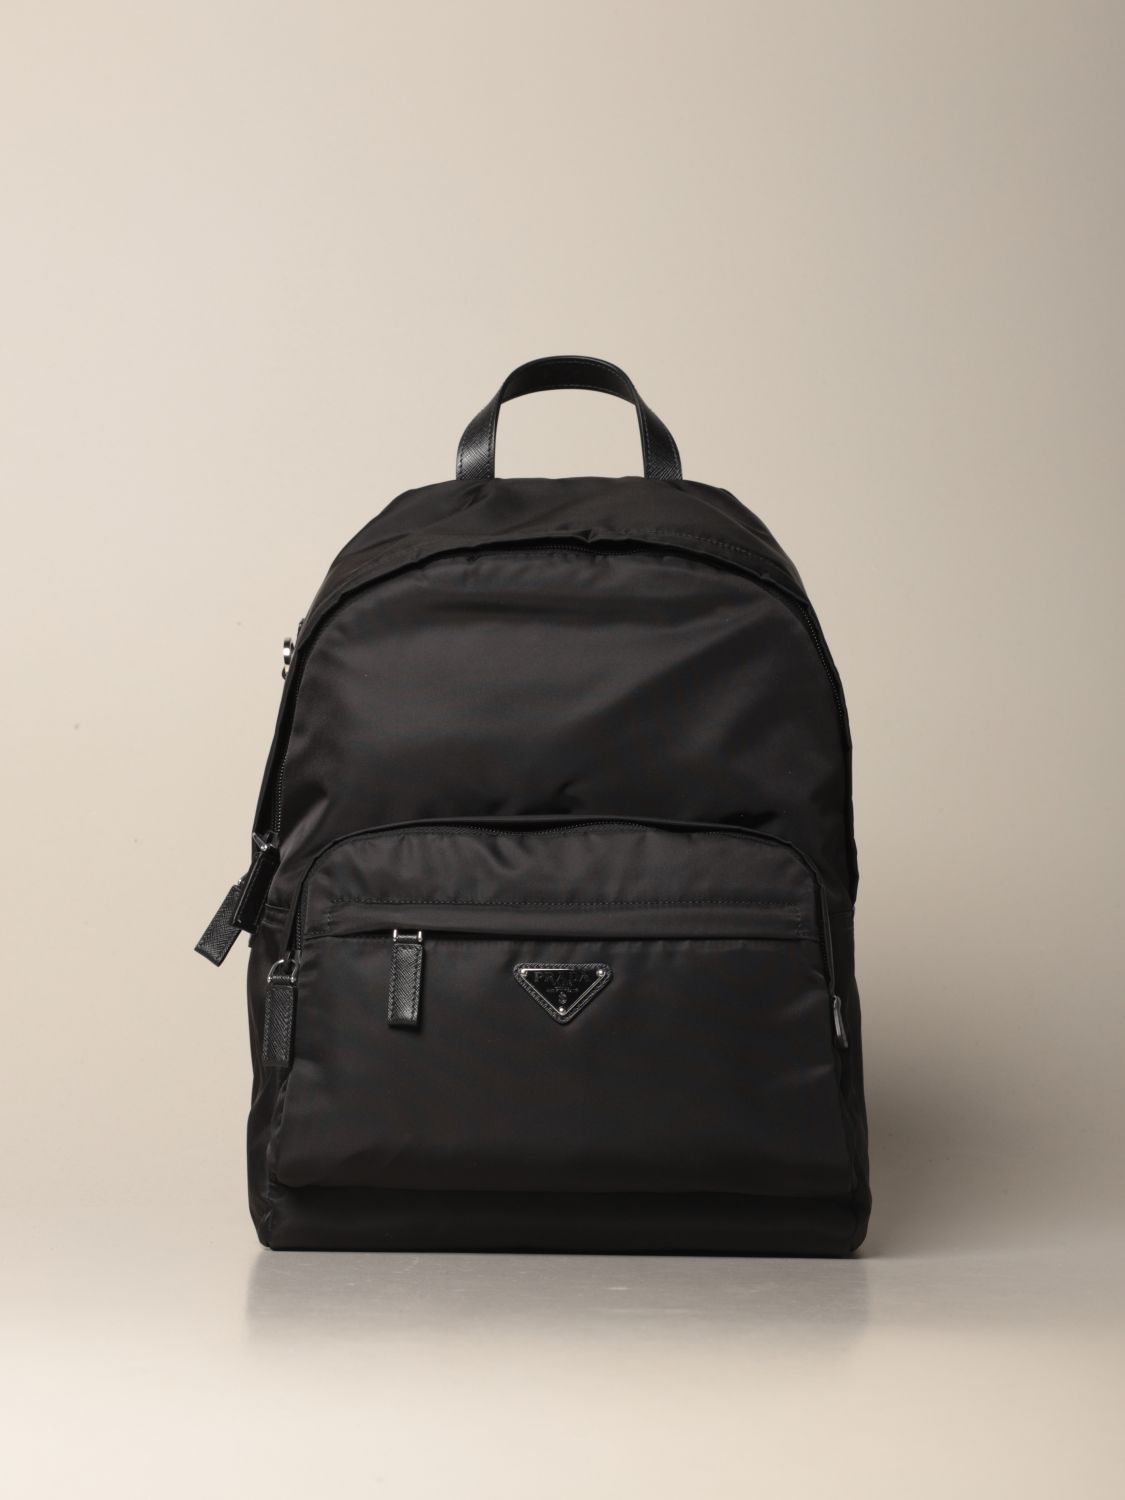 PRADA: nylon backpack with triangular logo - Black | Prada shoulder bag  2VZ066 973 online on 